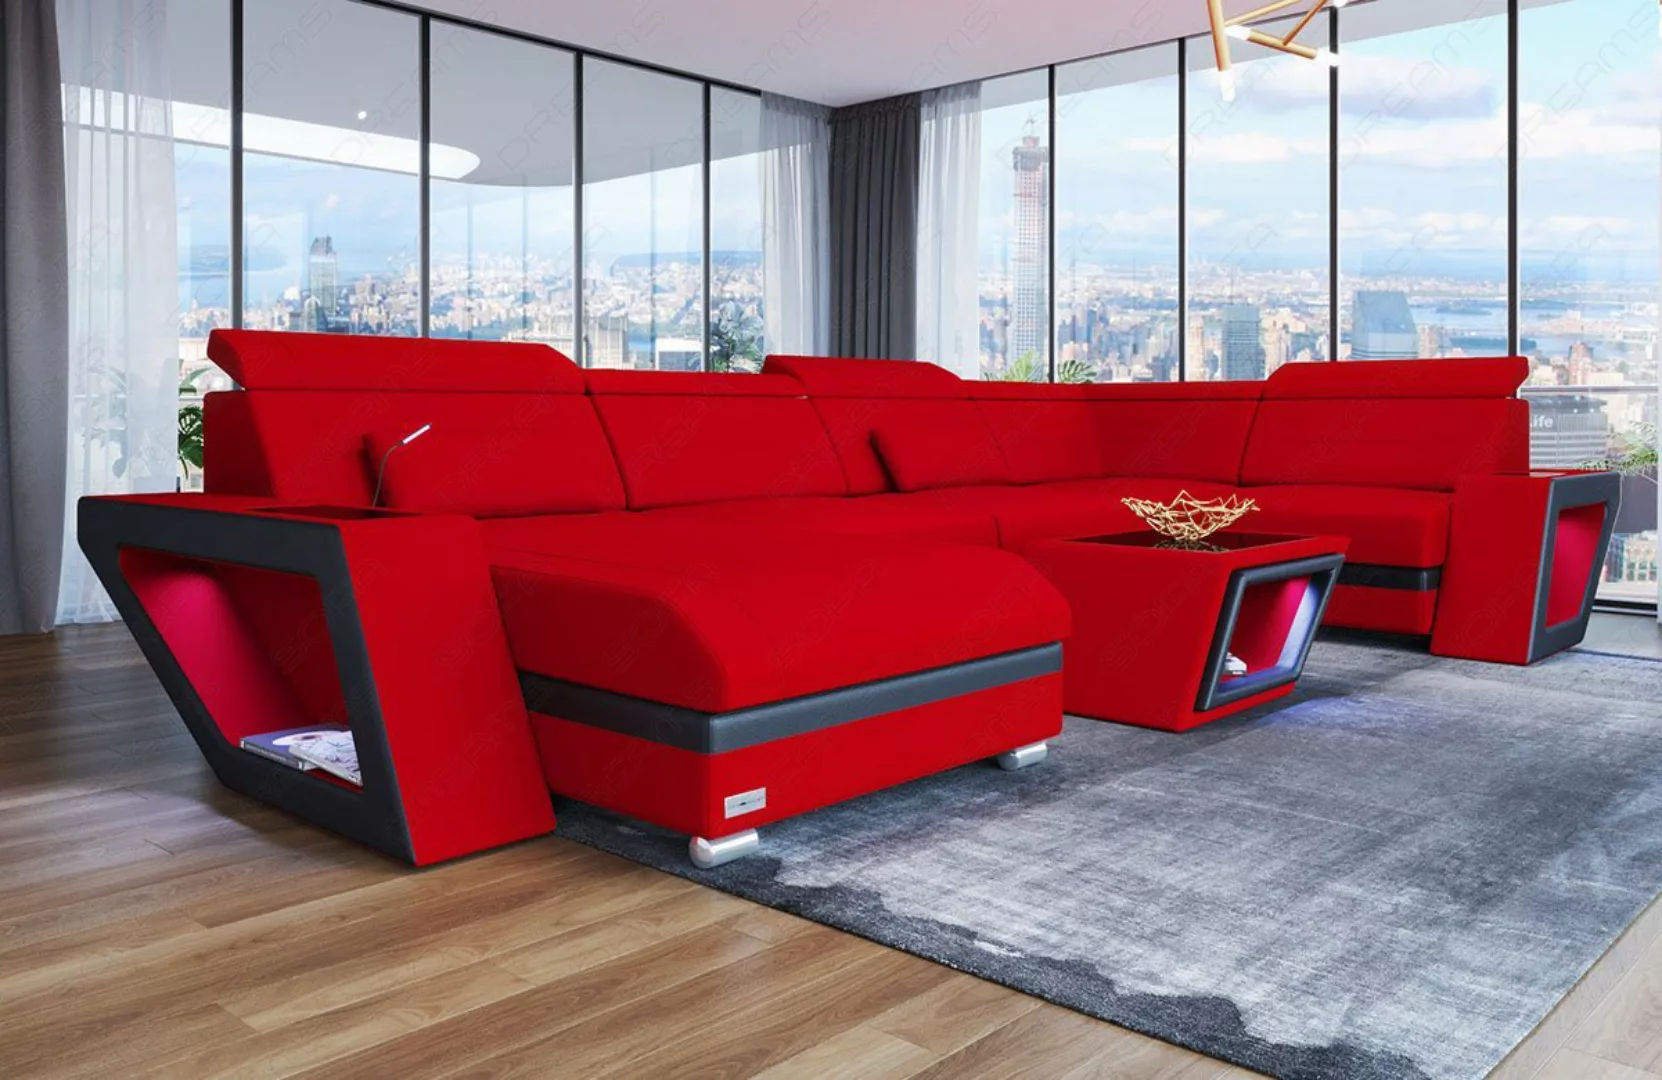 Sofa Dreams Wohnlandschaft Stoff Couch Stoffsofa Catania U Form Polstersofa günstig online kaufen